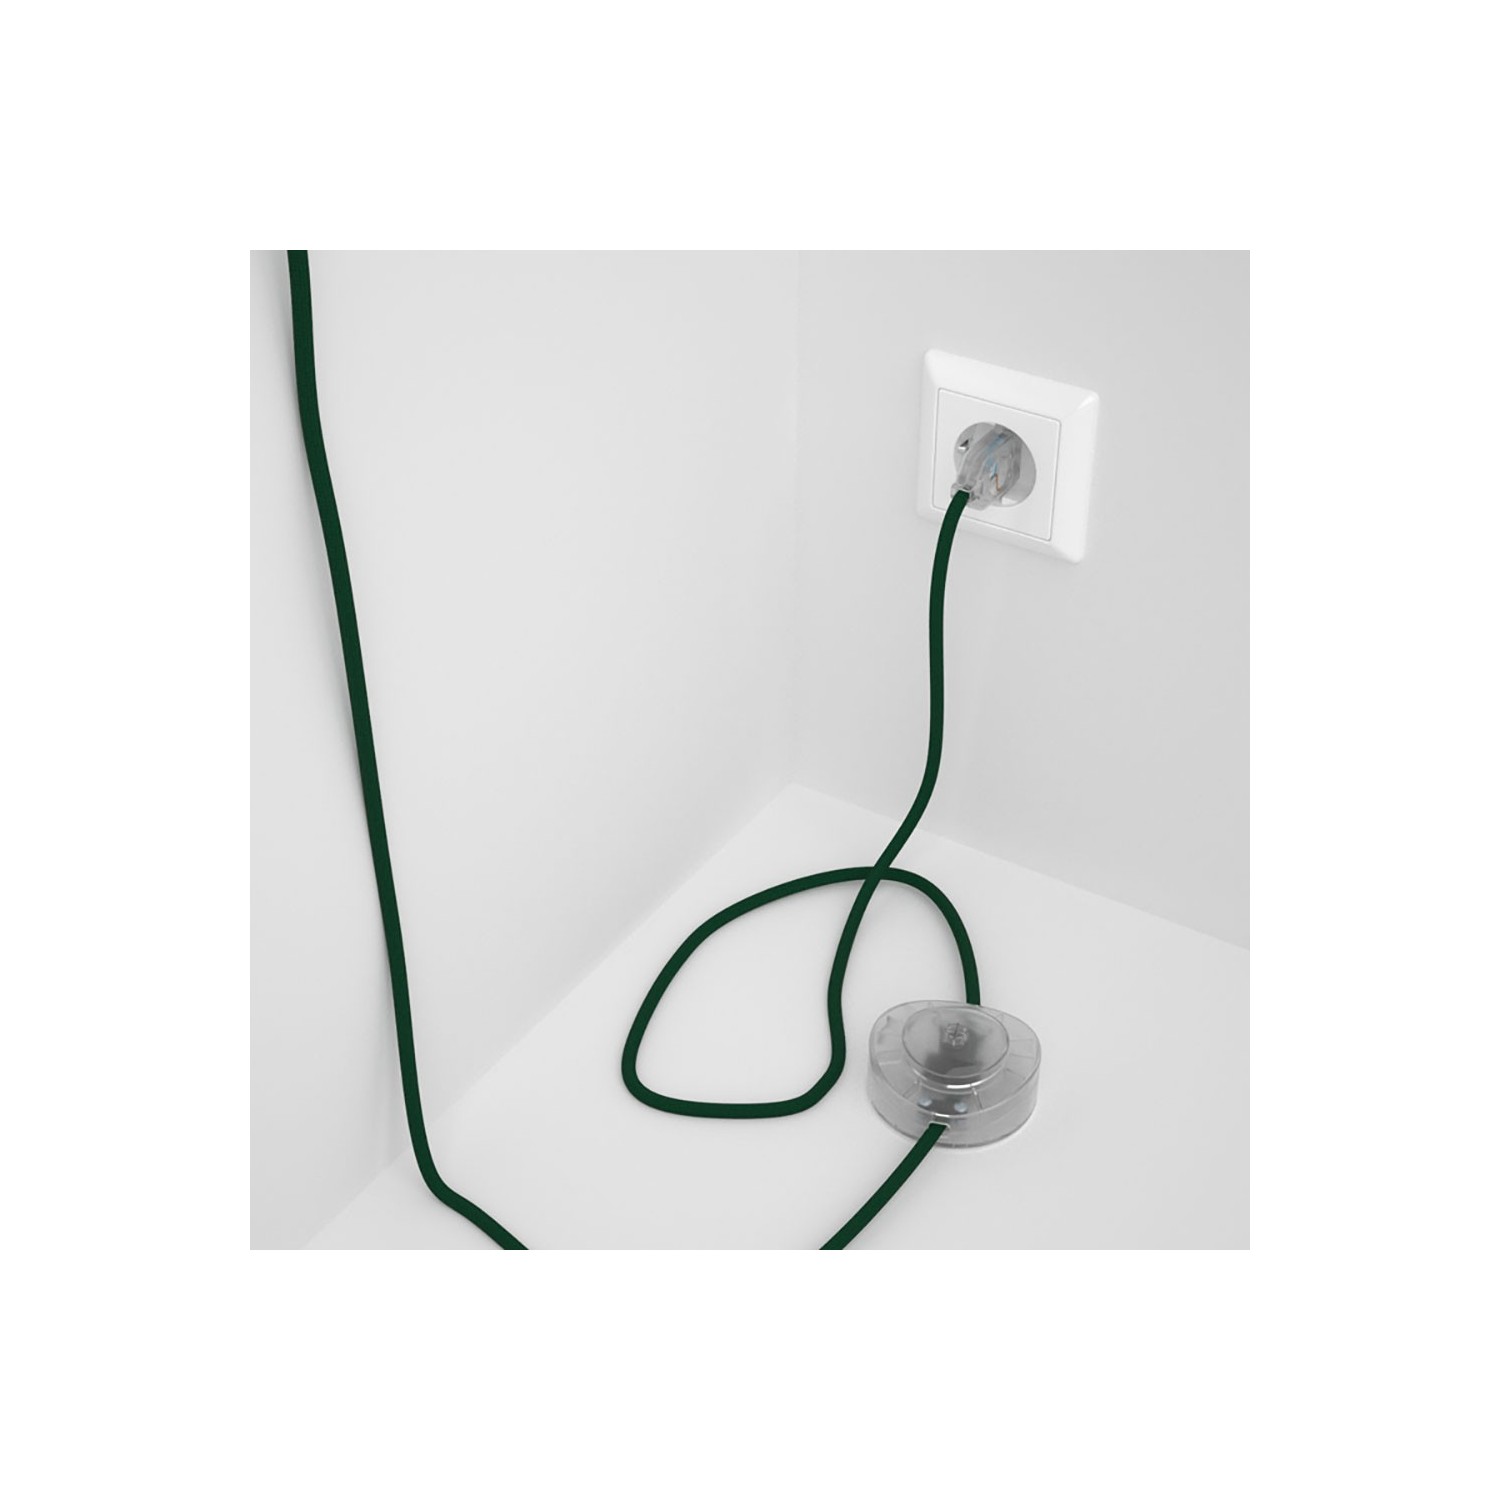 Cabo para candeeiro de chão, RM21 Verde Escuro Seda Artificial 3 m. Escolha a cor da ficha e do interruptor.